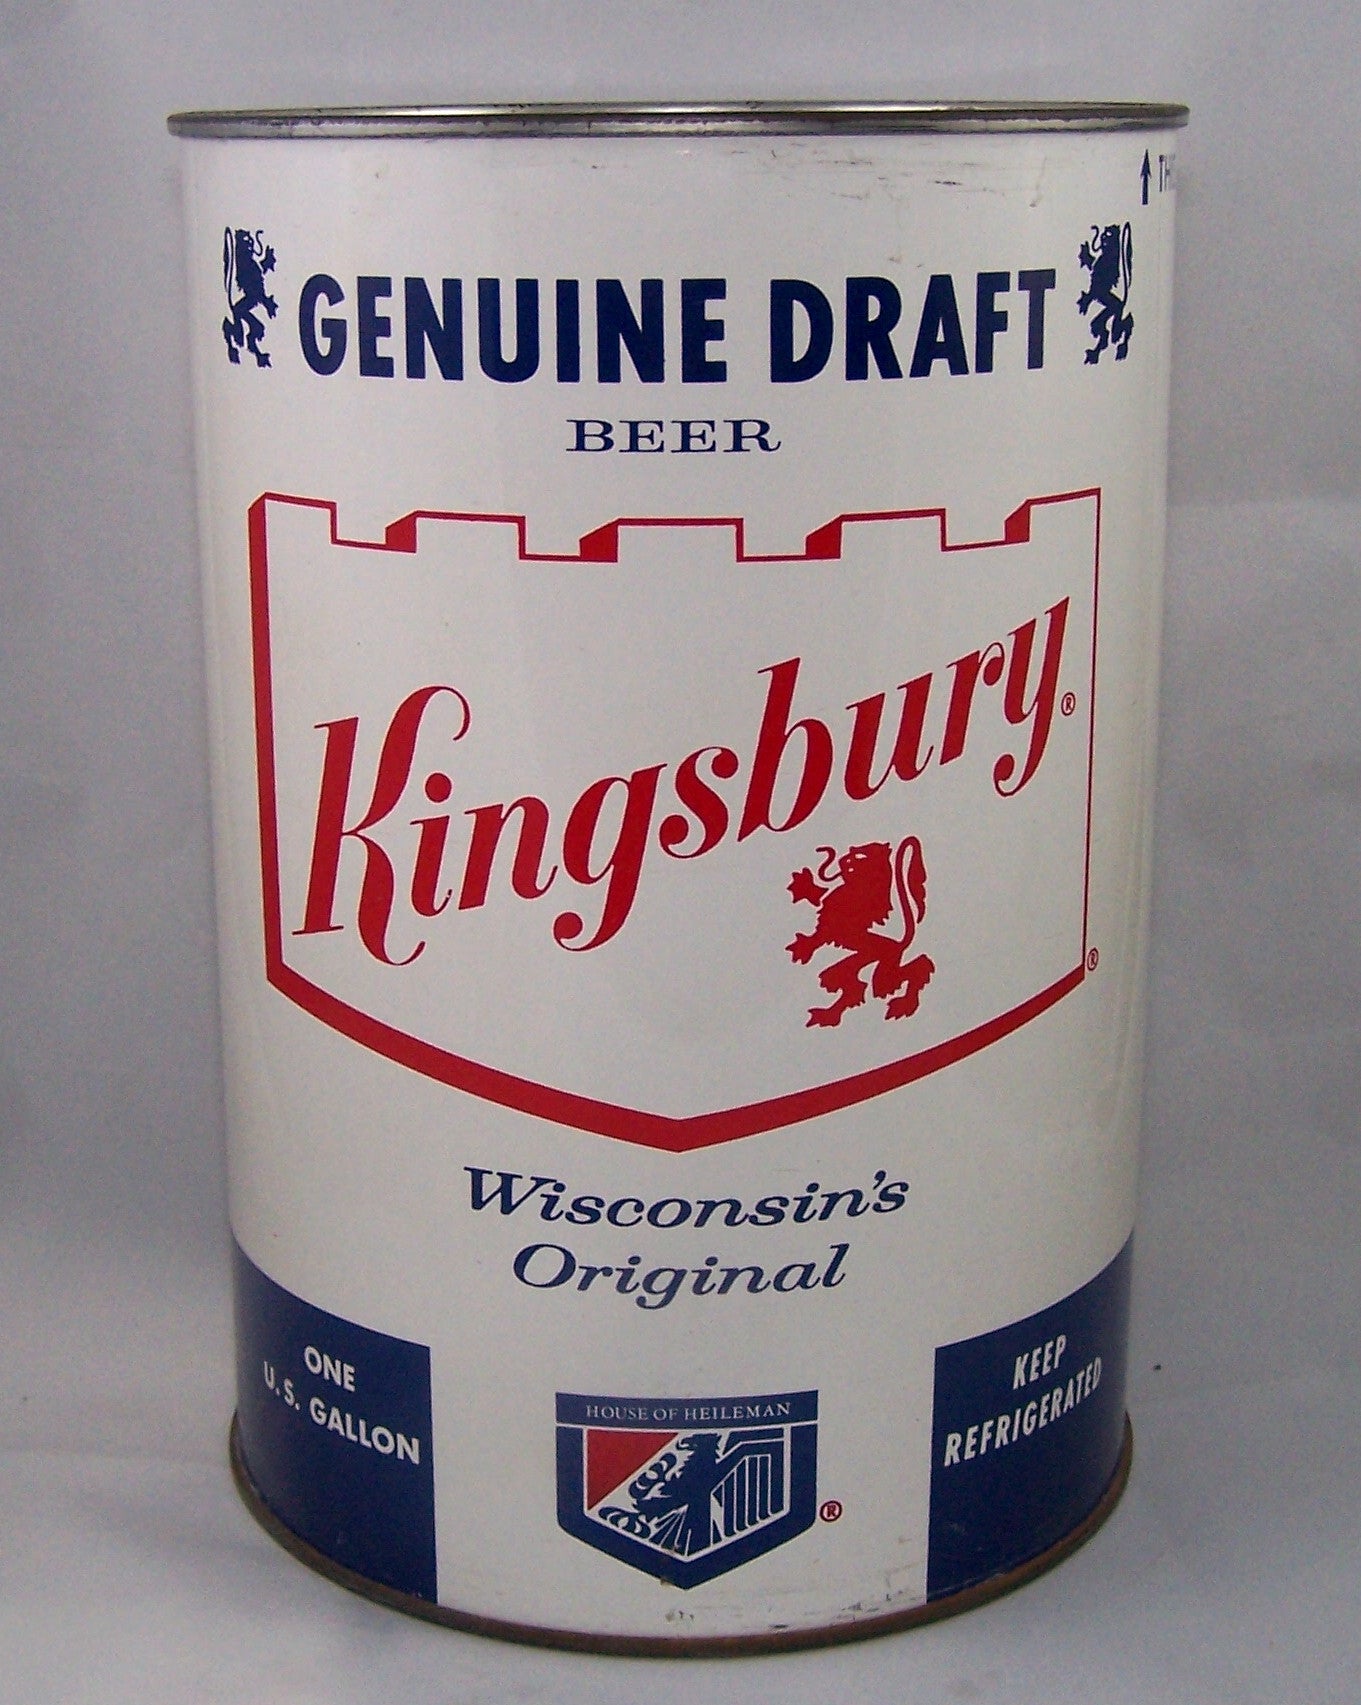 Kingsbury Genuine Draft Beer, One Gallon, USBC 245-6, Grade 1/1+ Sold on 02/01/16